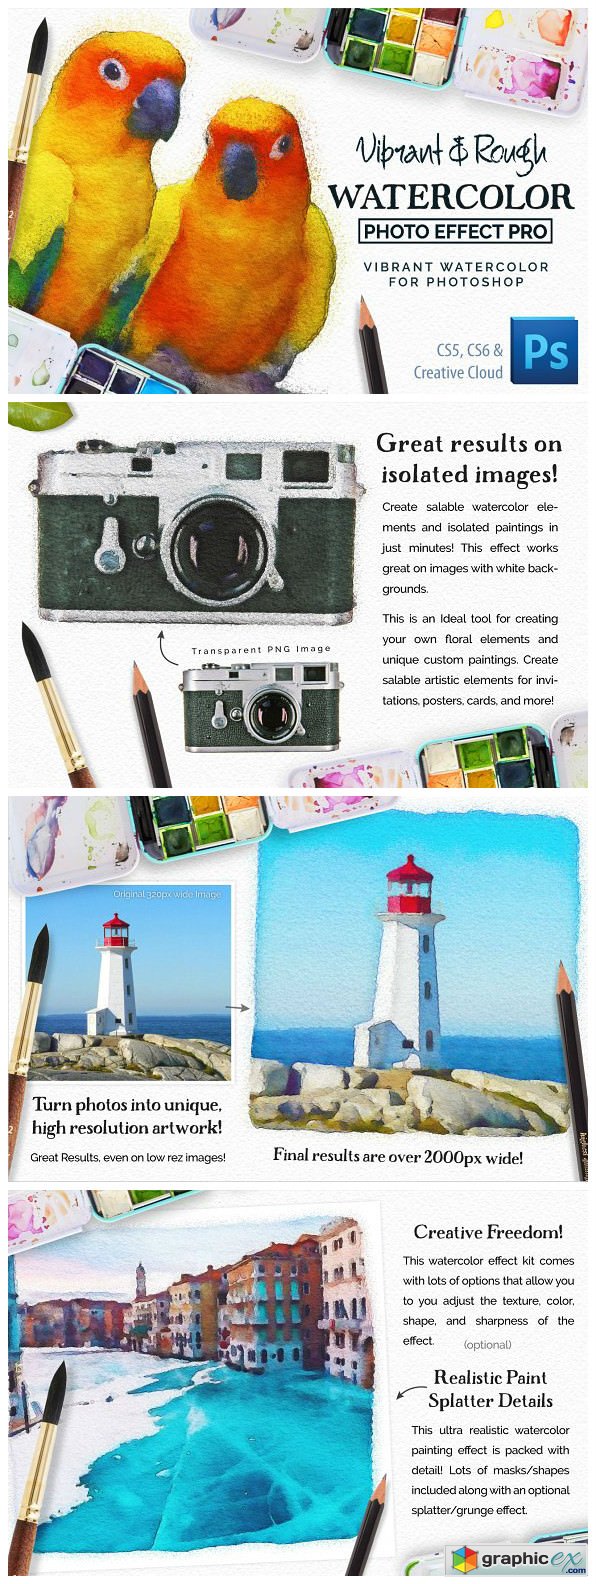 Vibrant Watercolor Photo Effect Kit